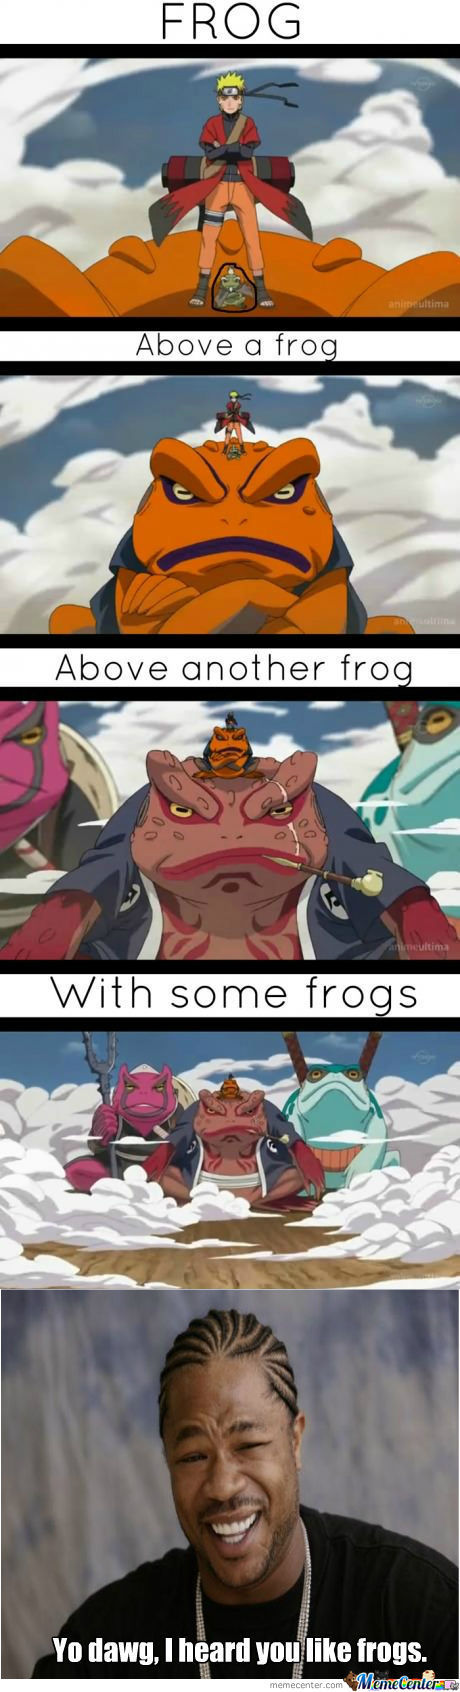 frogs....everywhere - meme